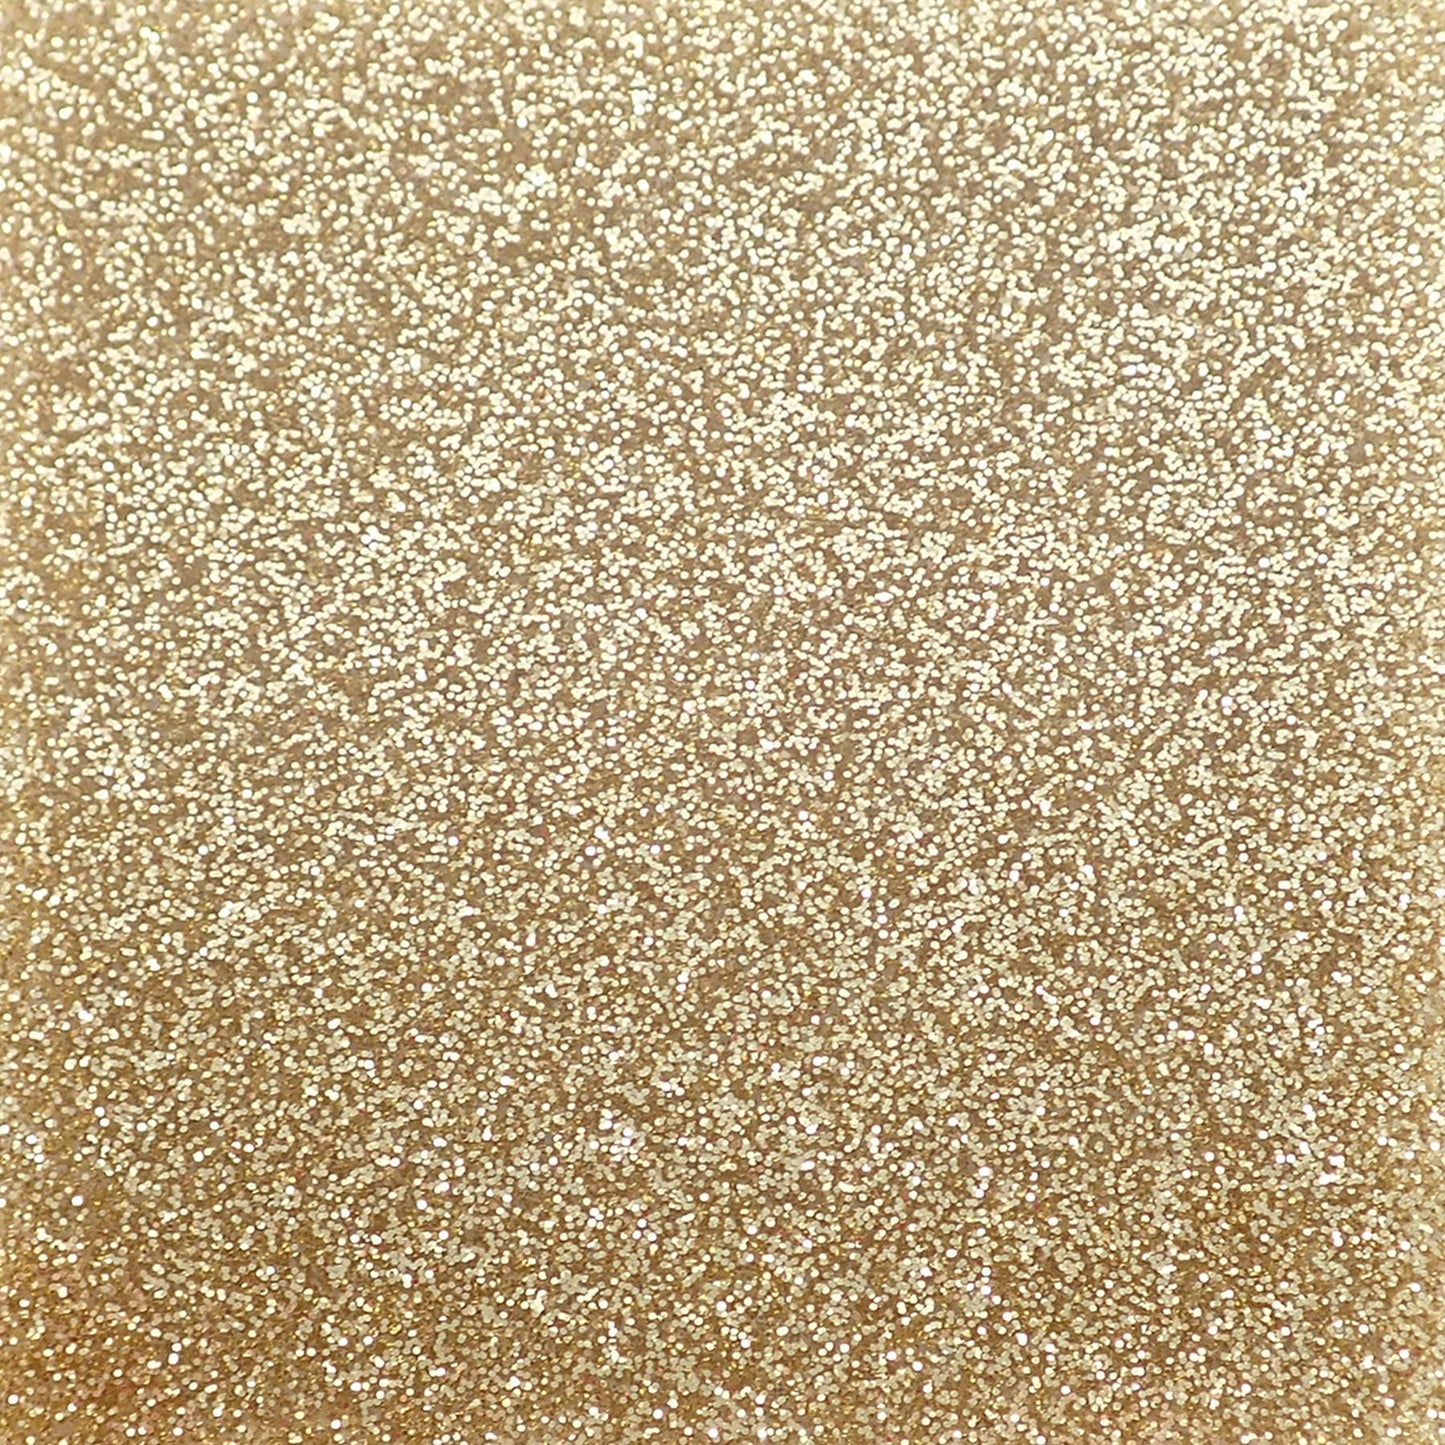 Incudo Light Gold Glitter Acrylic Sheet - 300x250x3mm